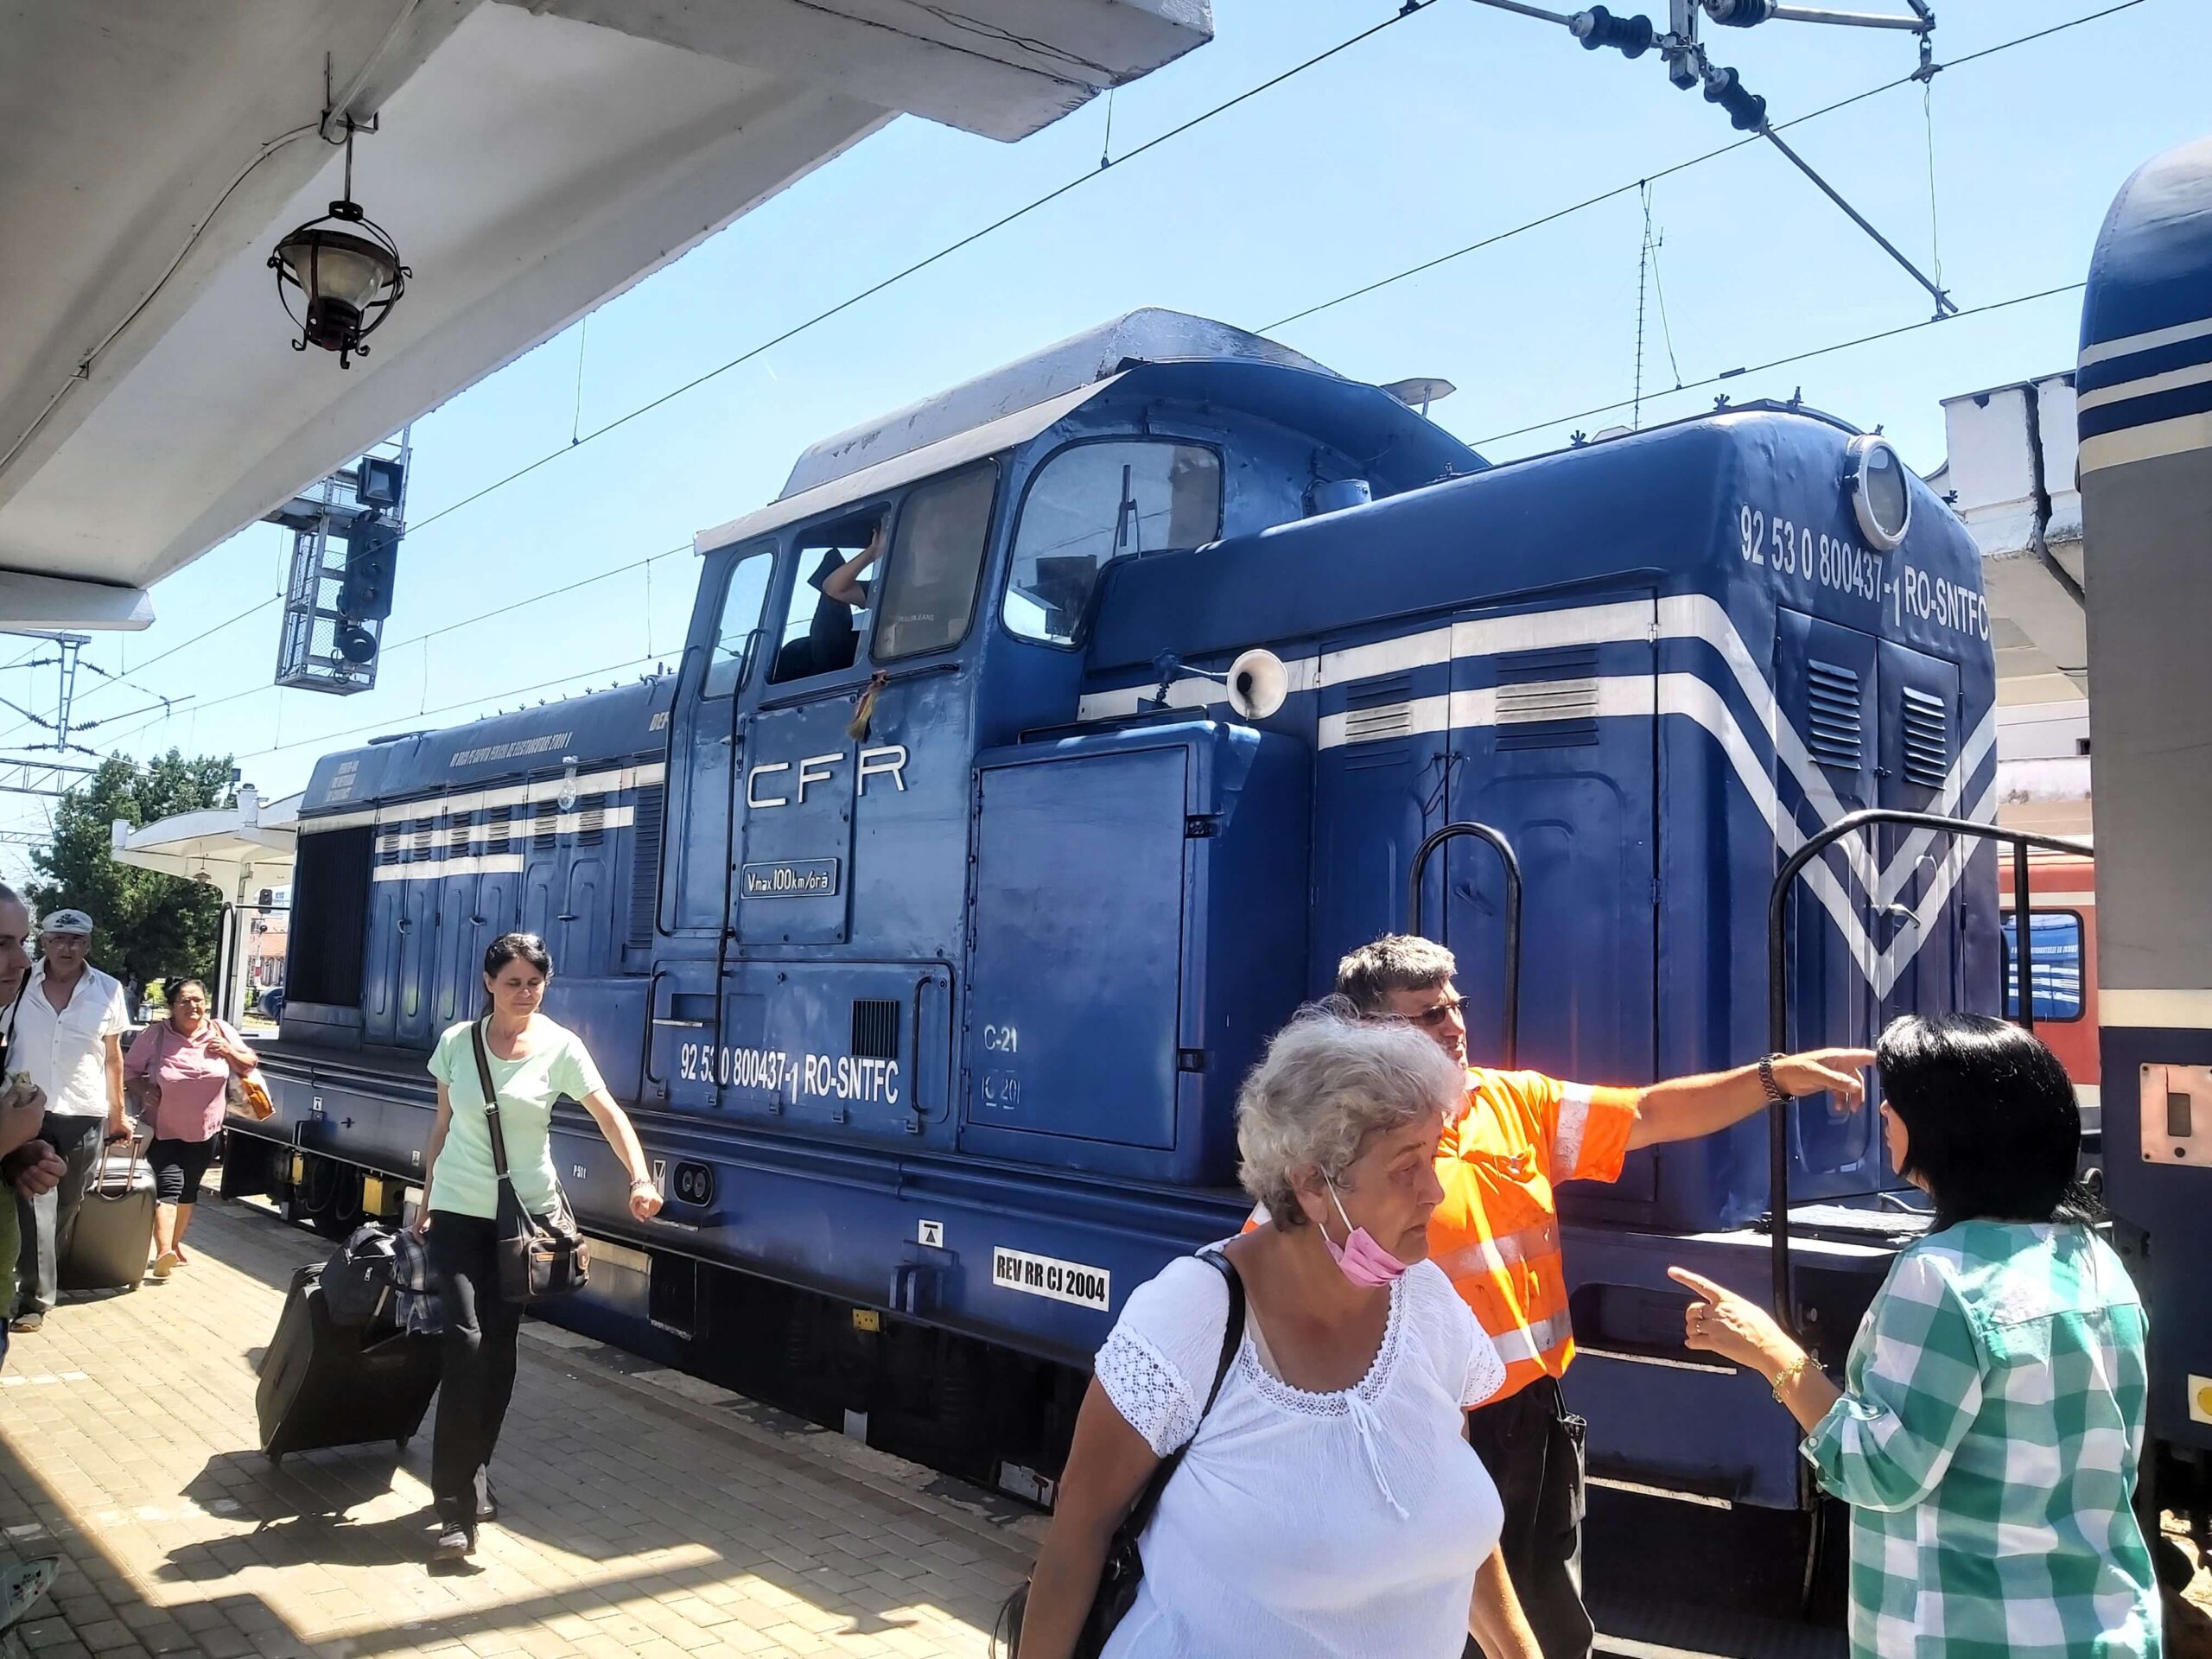 Blue diesel train in Timisoara, Romania